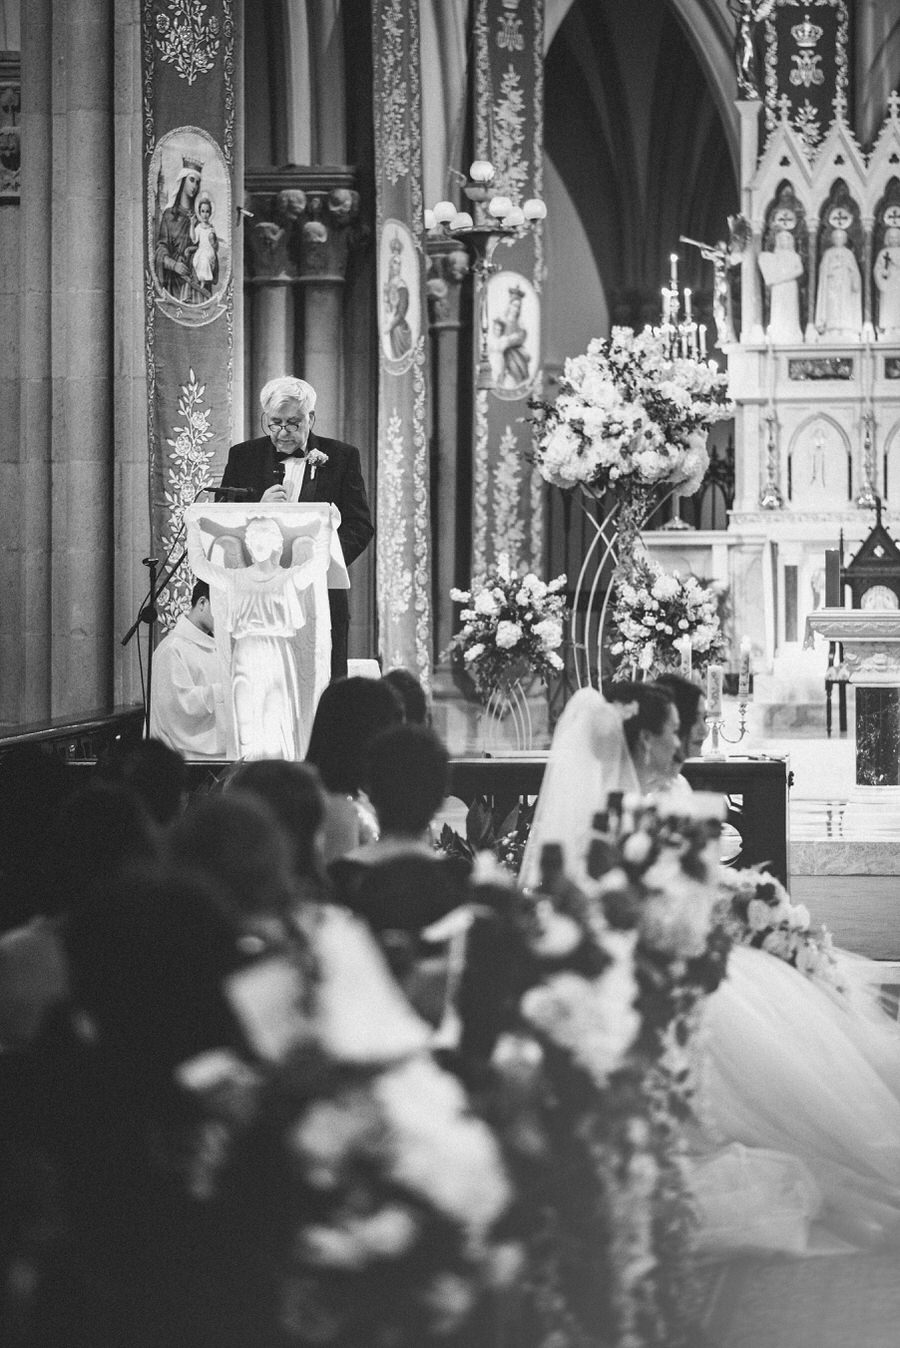 fathers speech at wedding at xujiahui cathedral